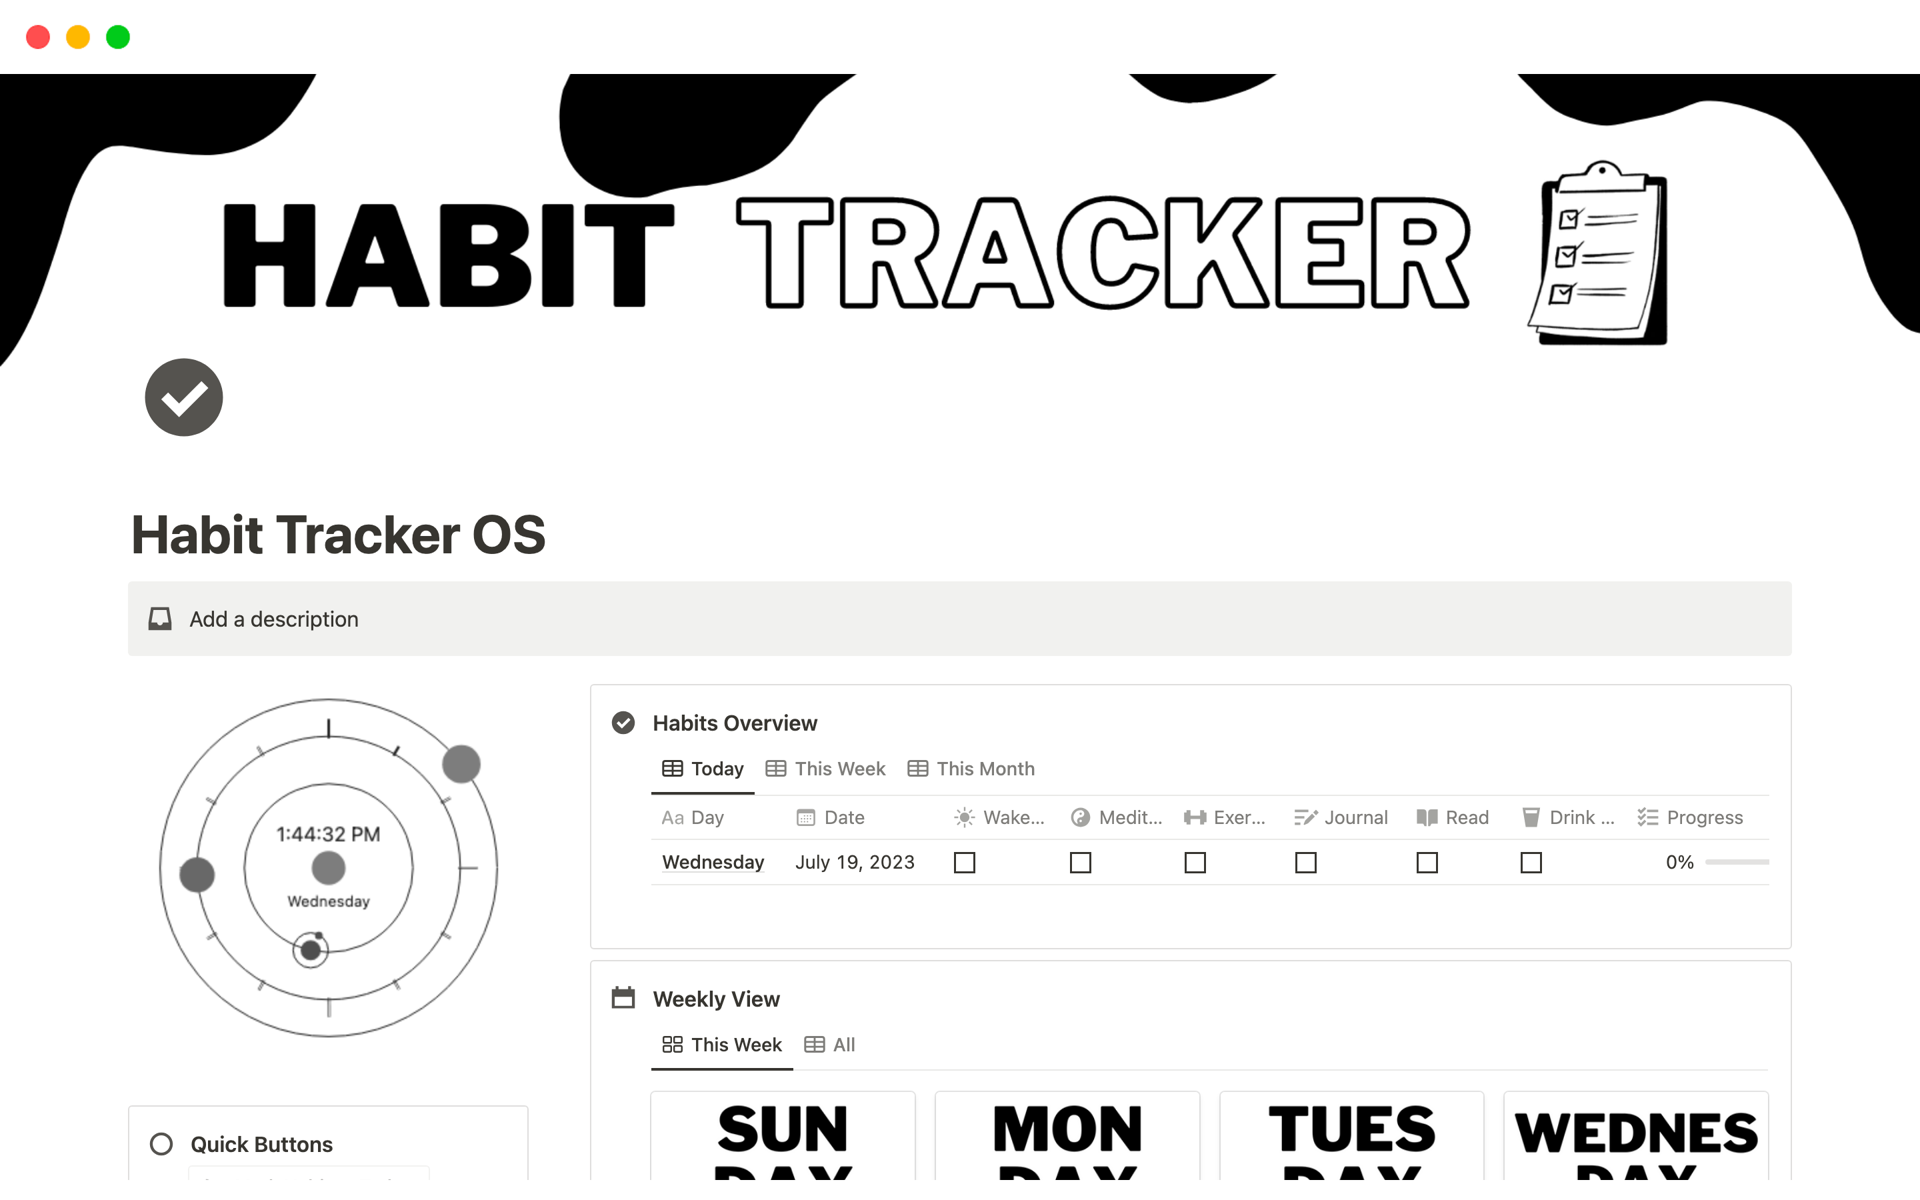 Daily Journal & Habit Tracker 